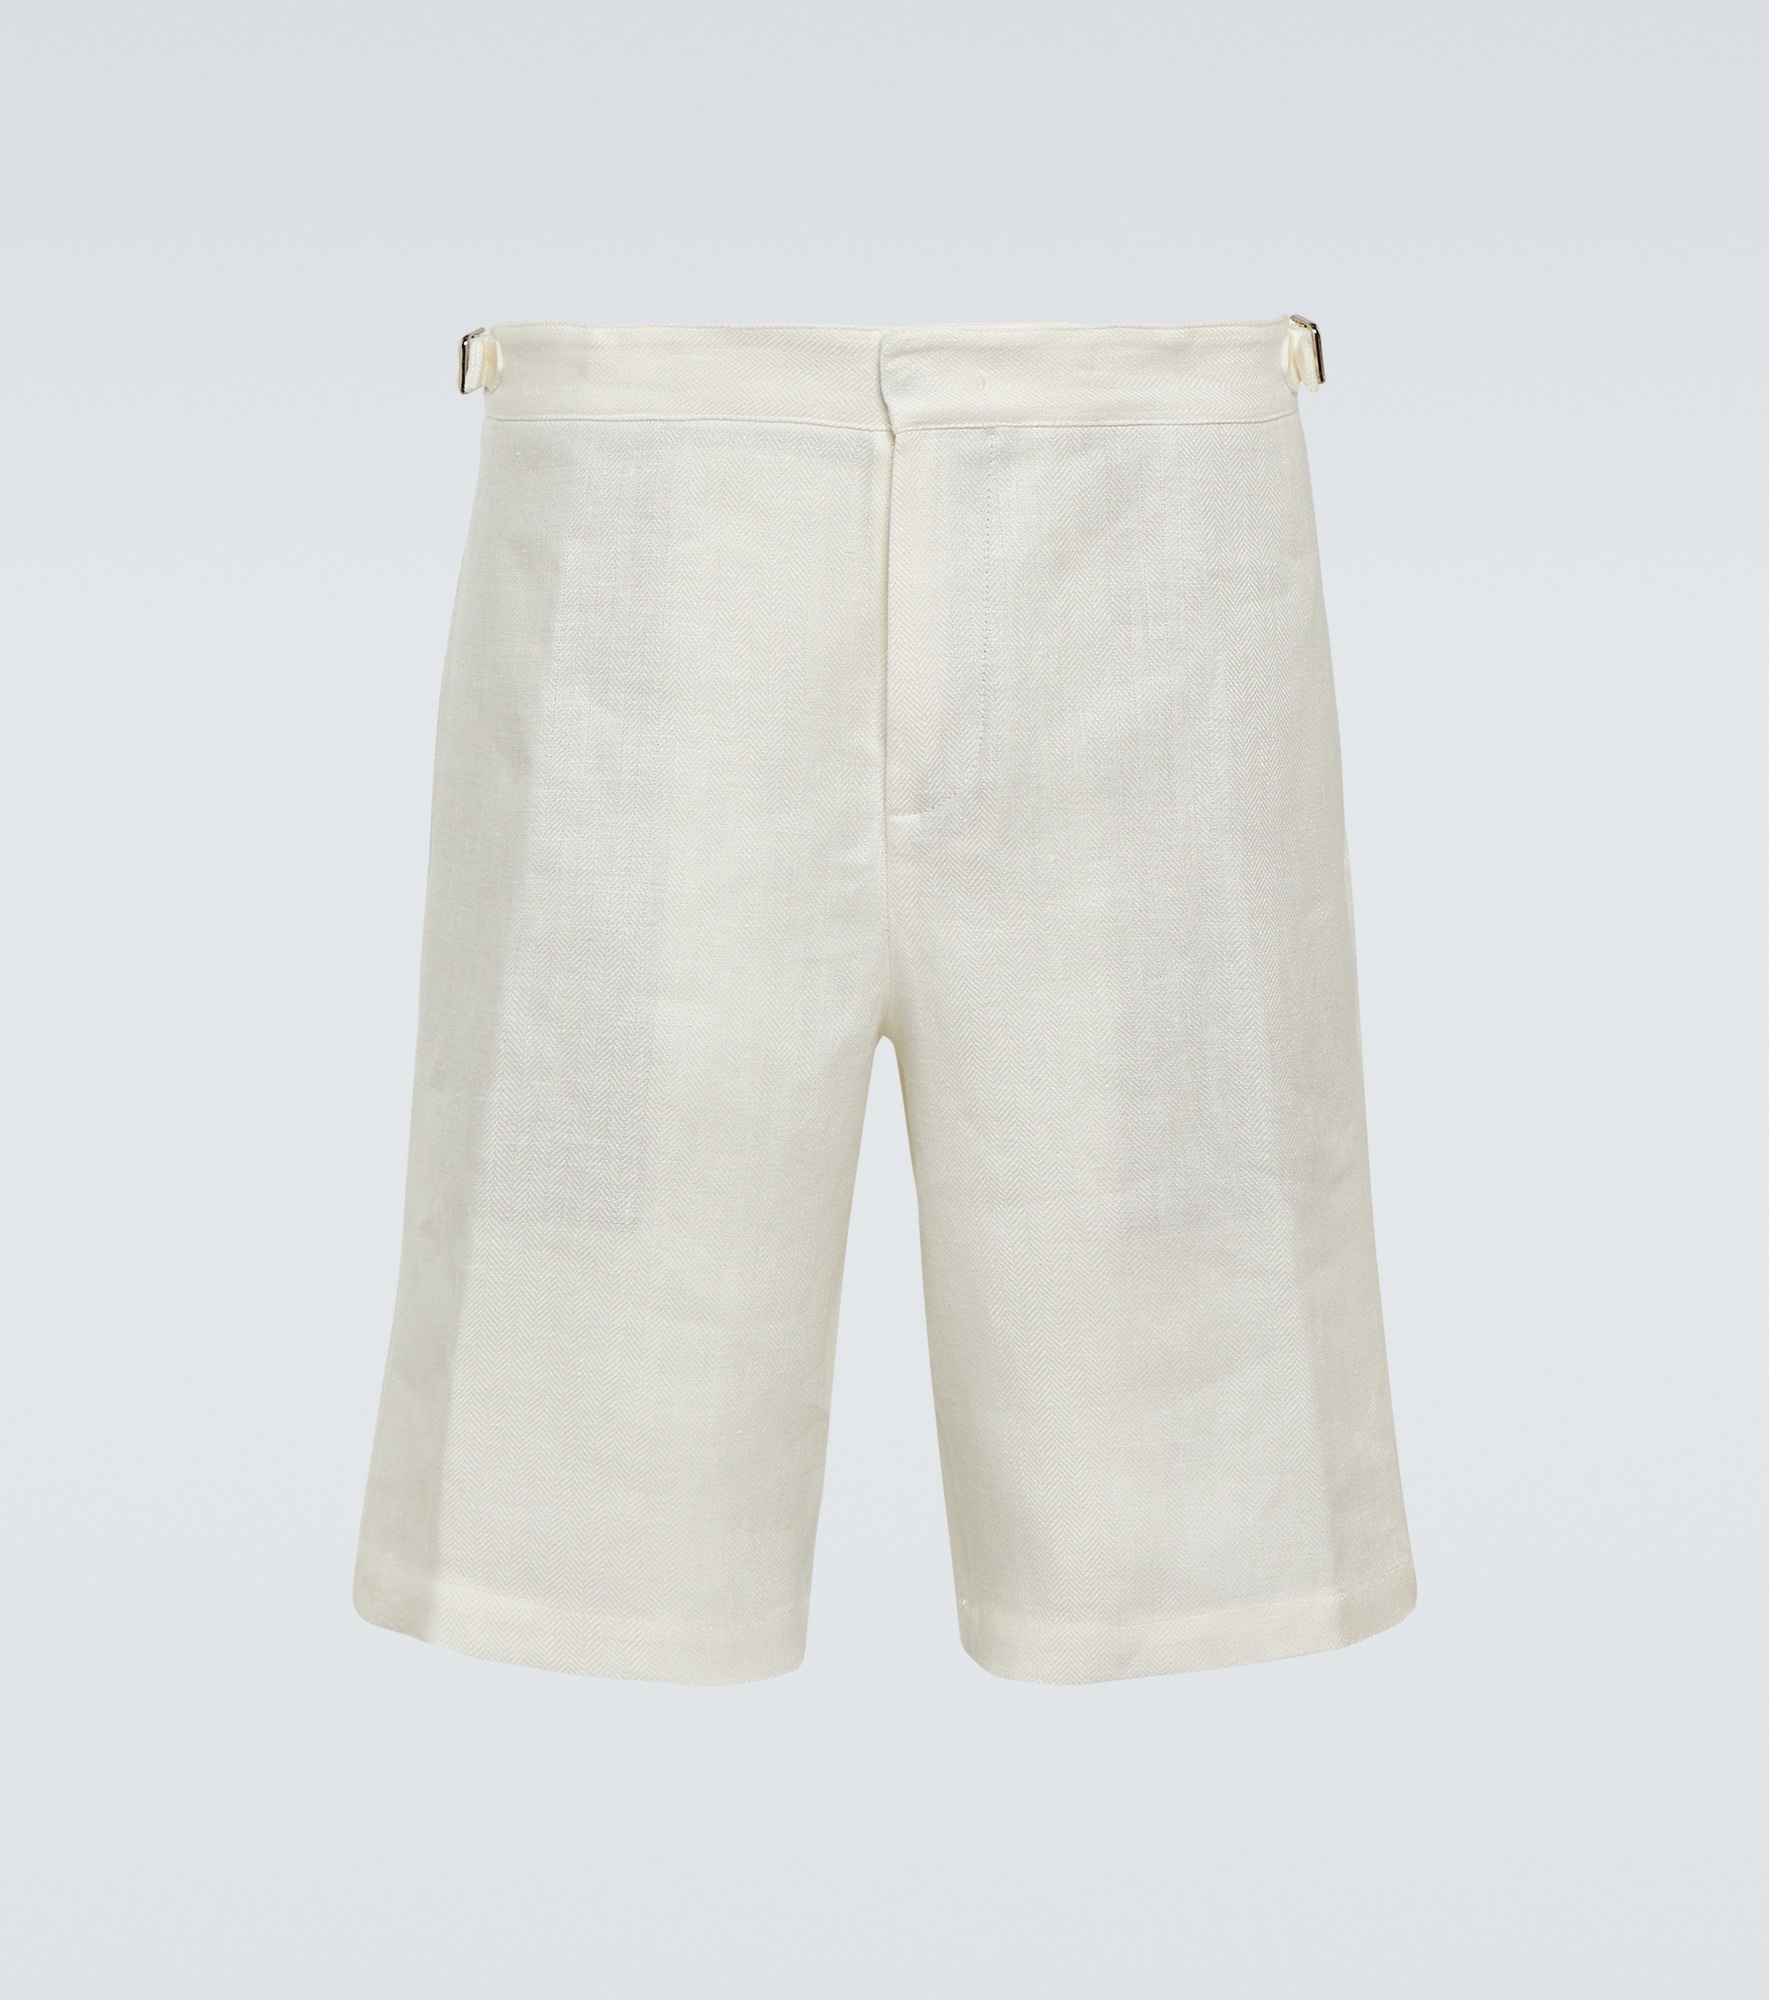 Majuro linen Bermuda shorts - 1